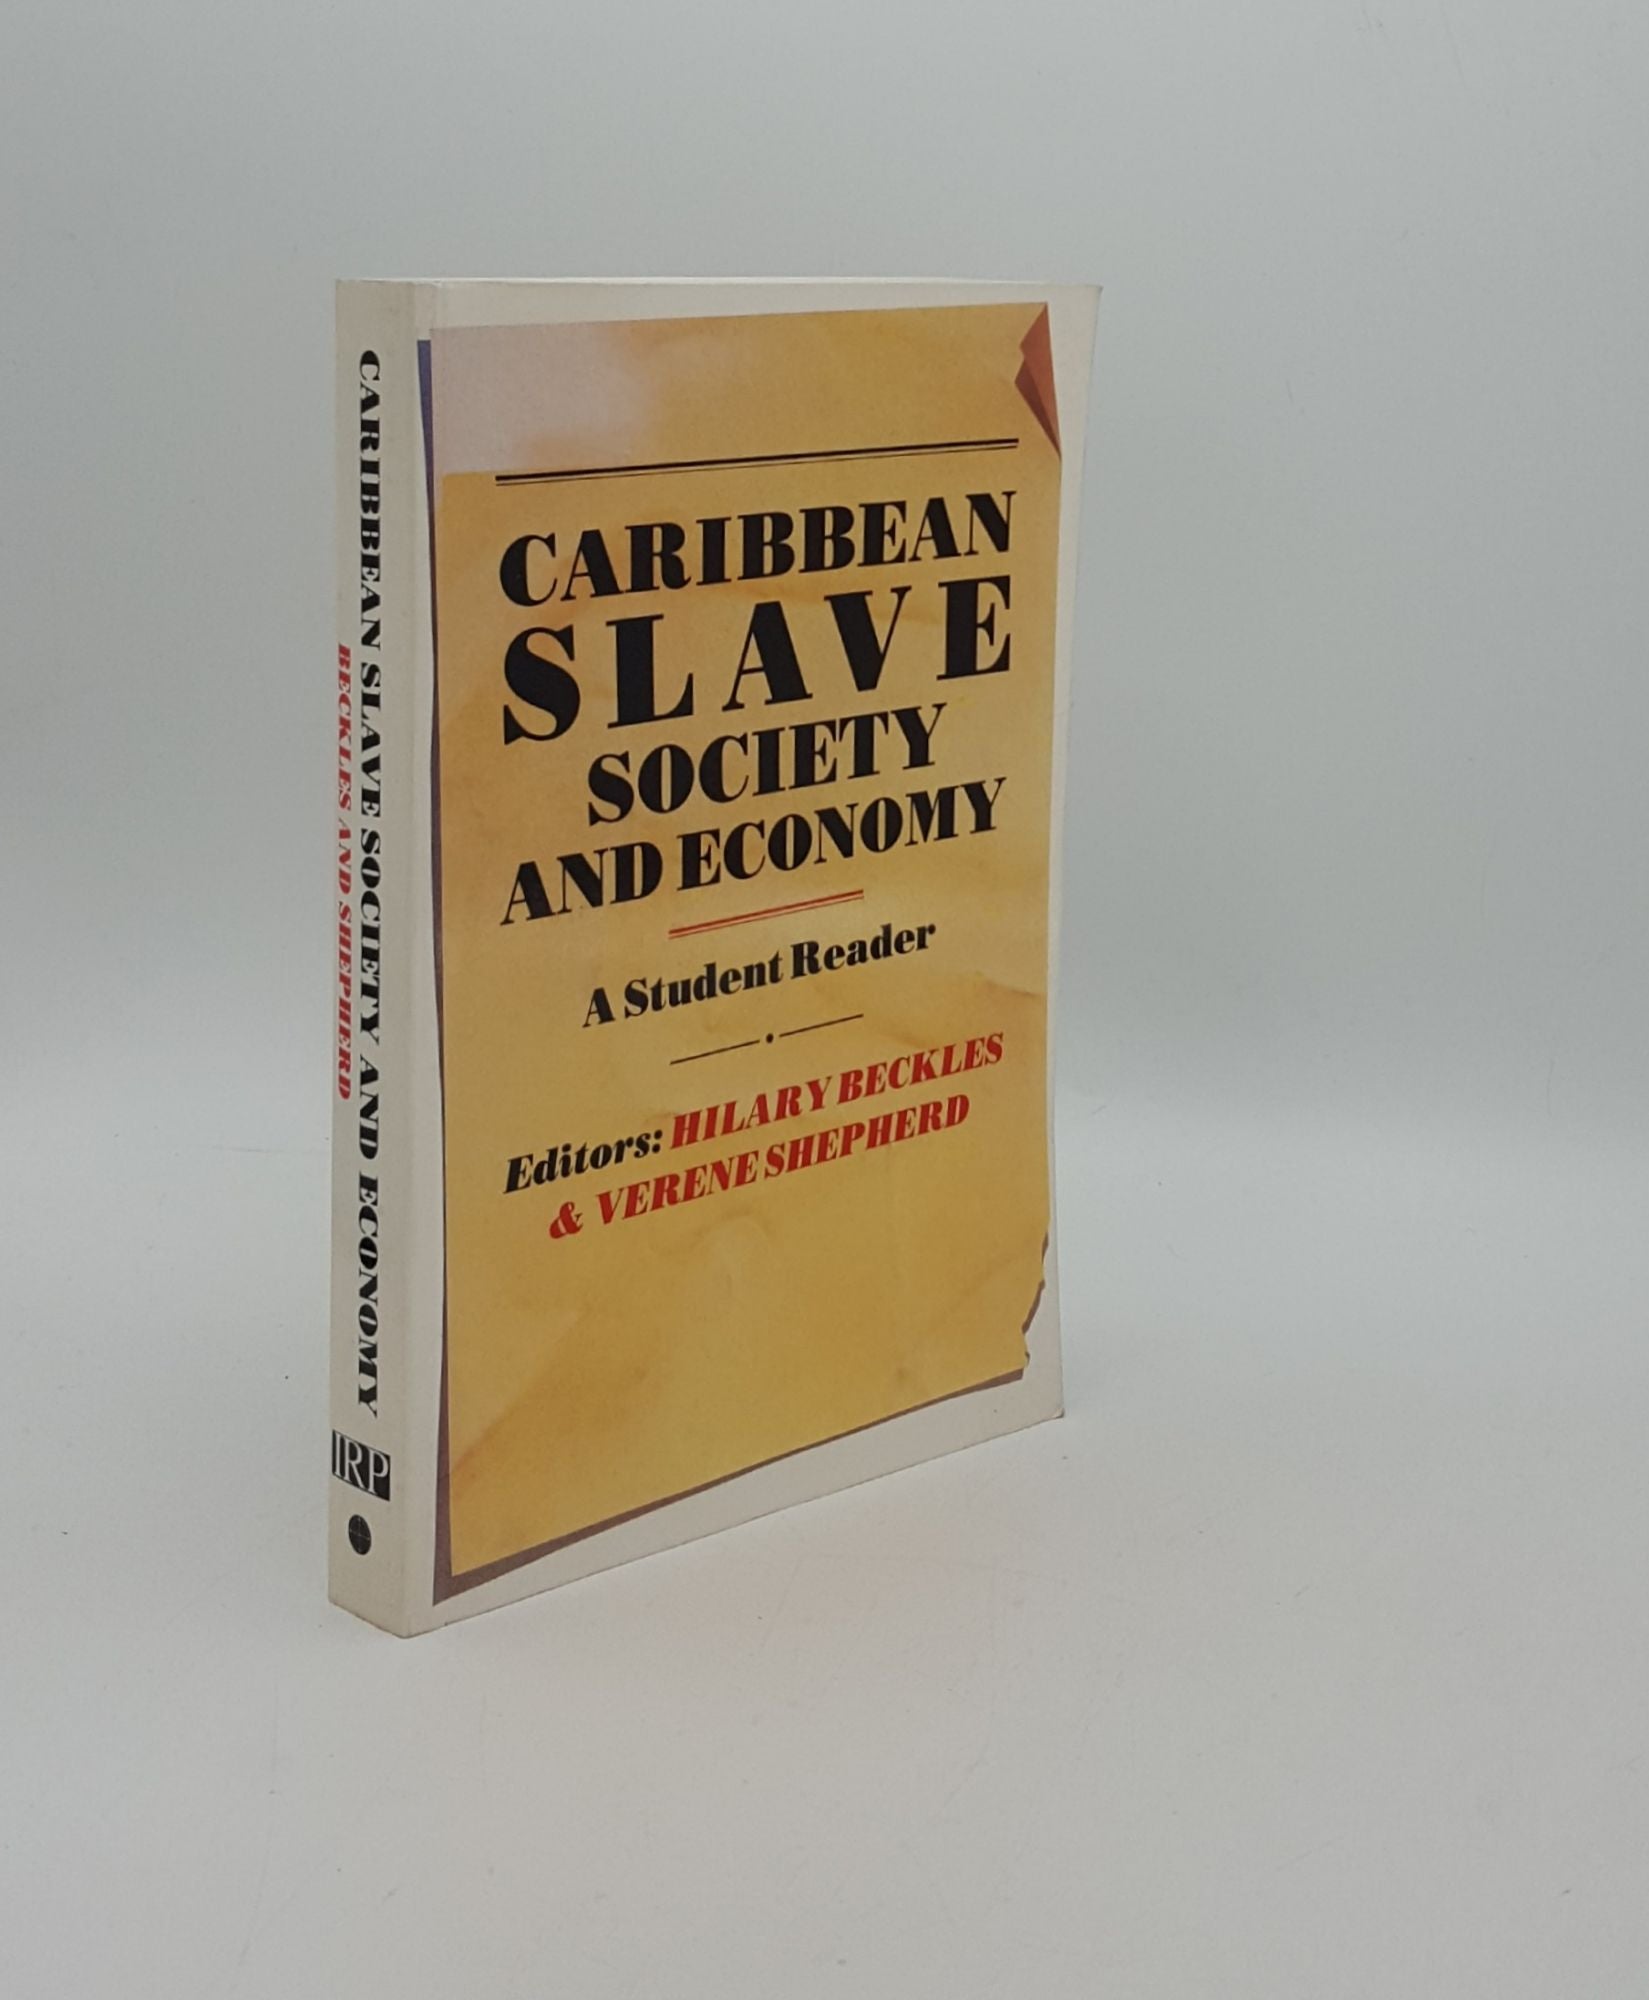 BECKLES Hilary, SHEPHERD Verene - Caribbean Slave Society and Economy a Student Reader